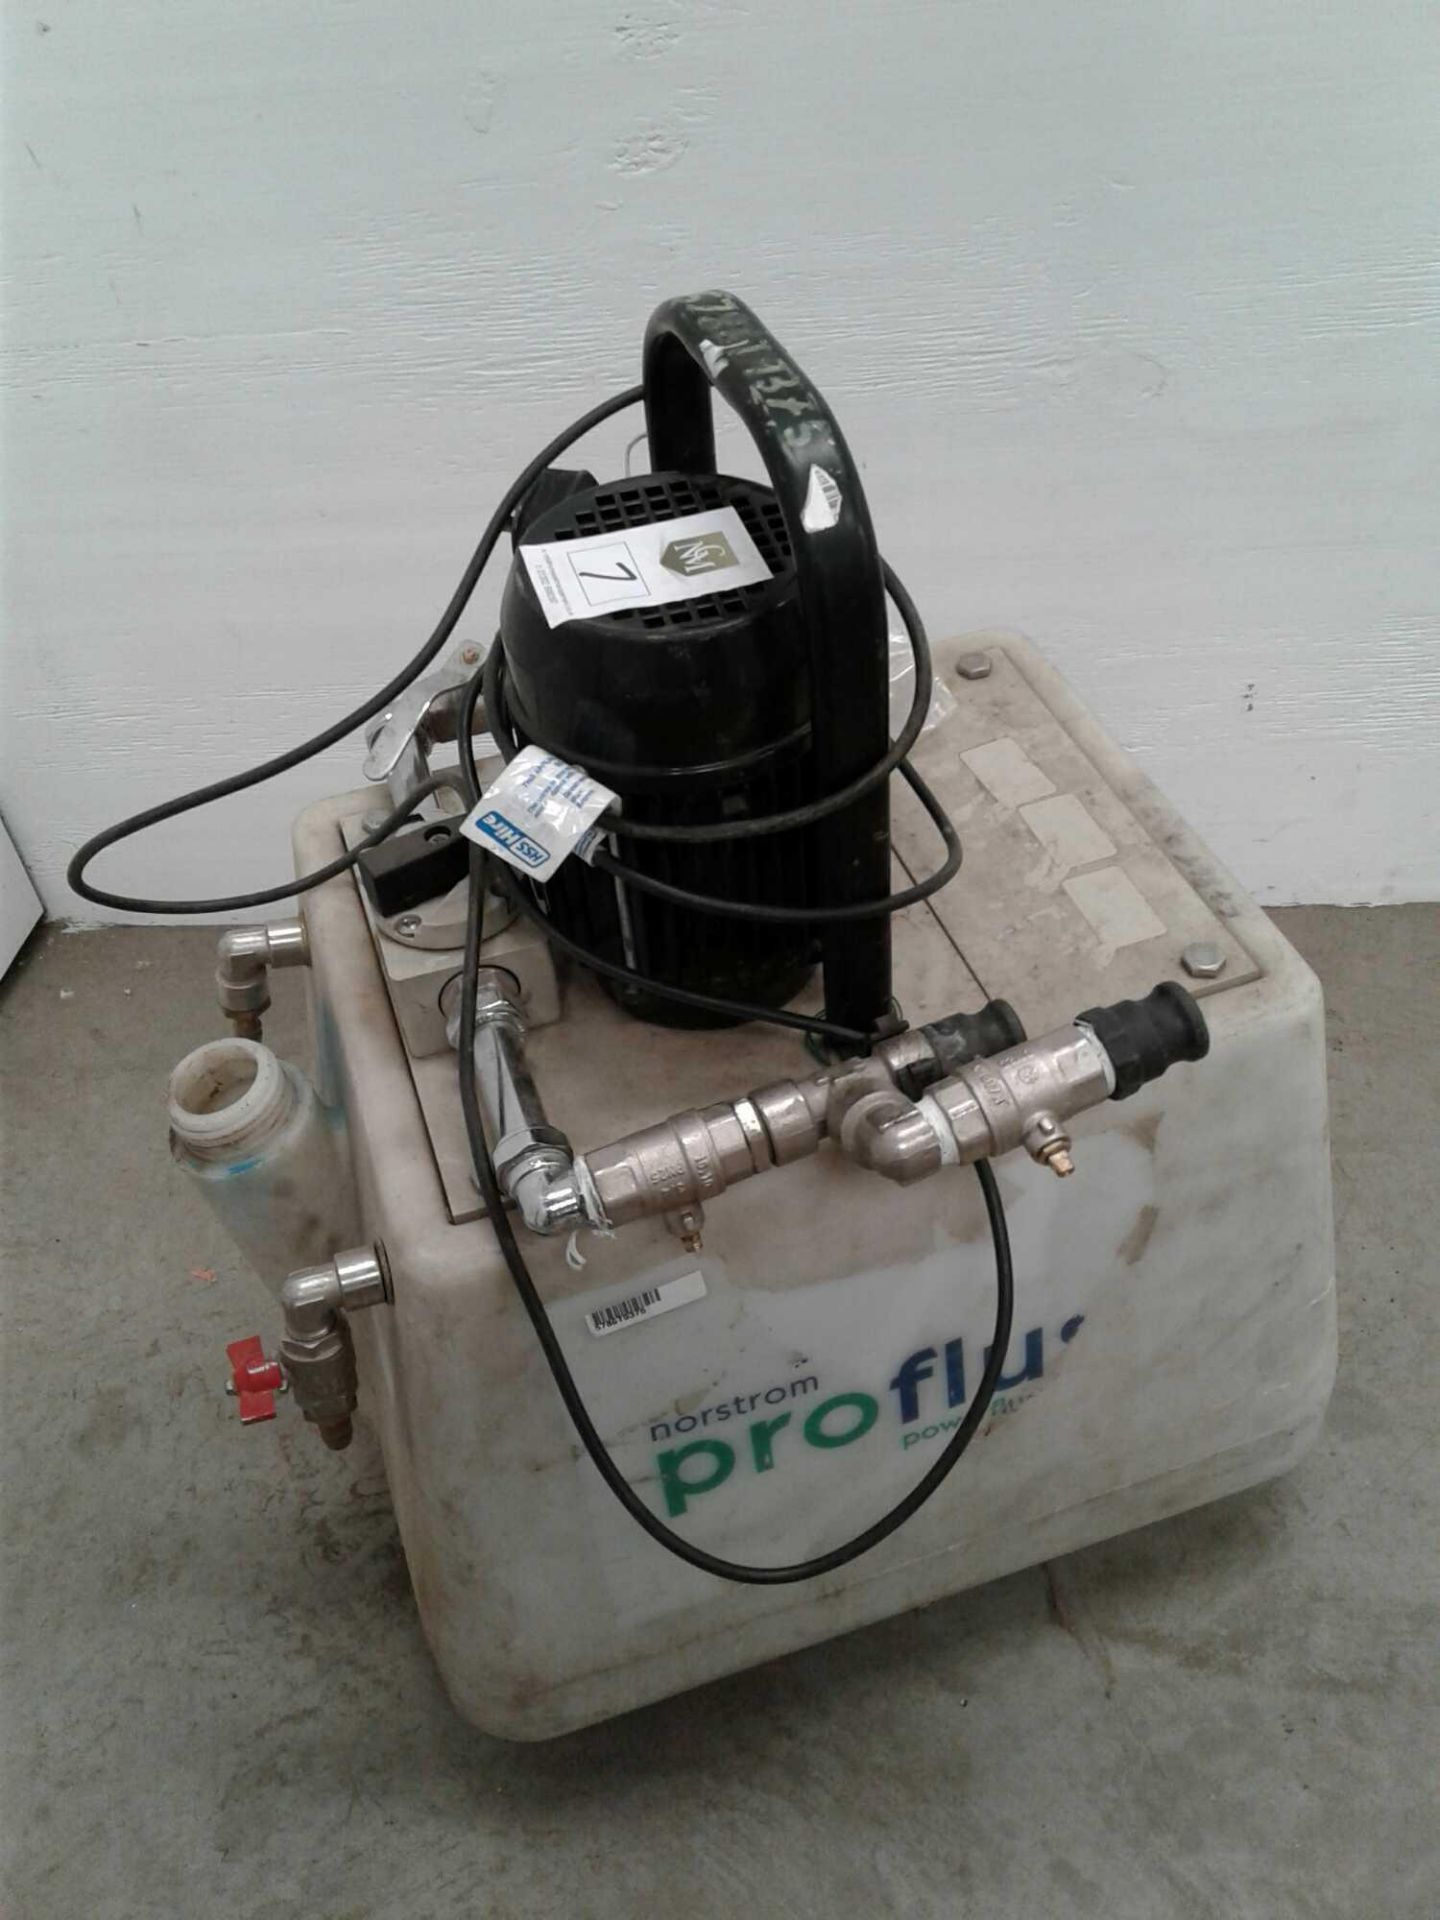 Norstrom pro flush power flushing system 230 V - Image 3 of 3